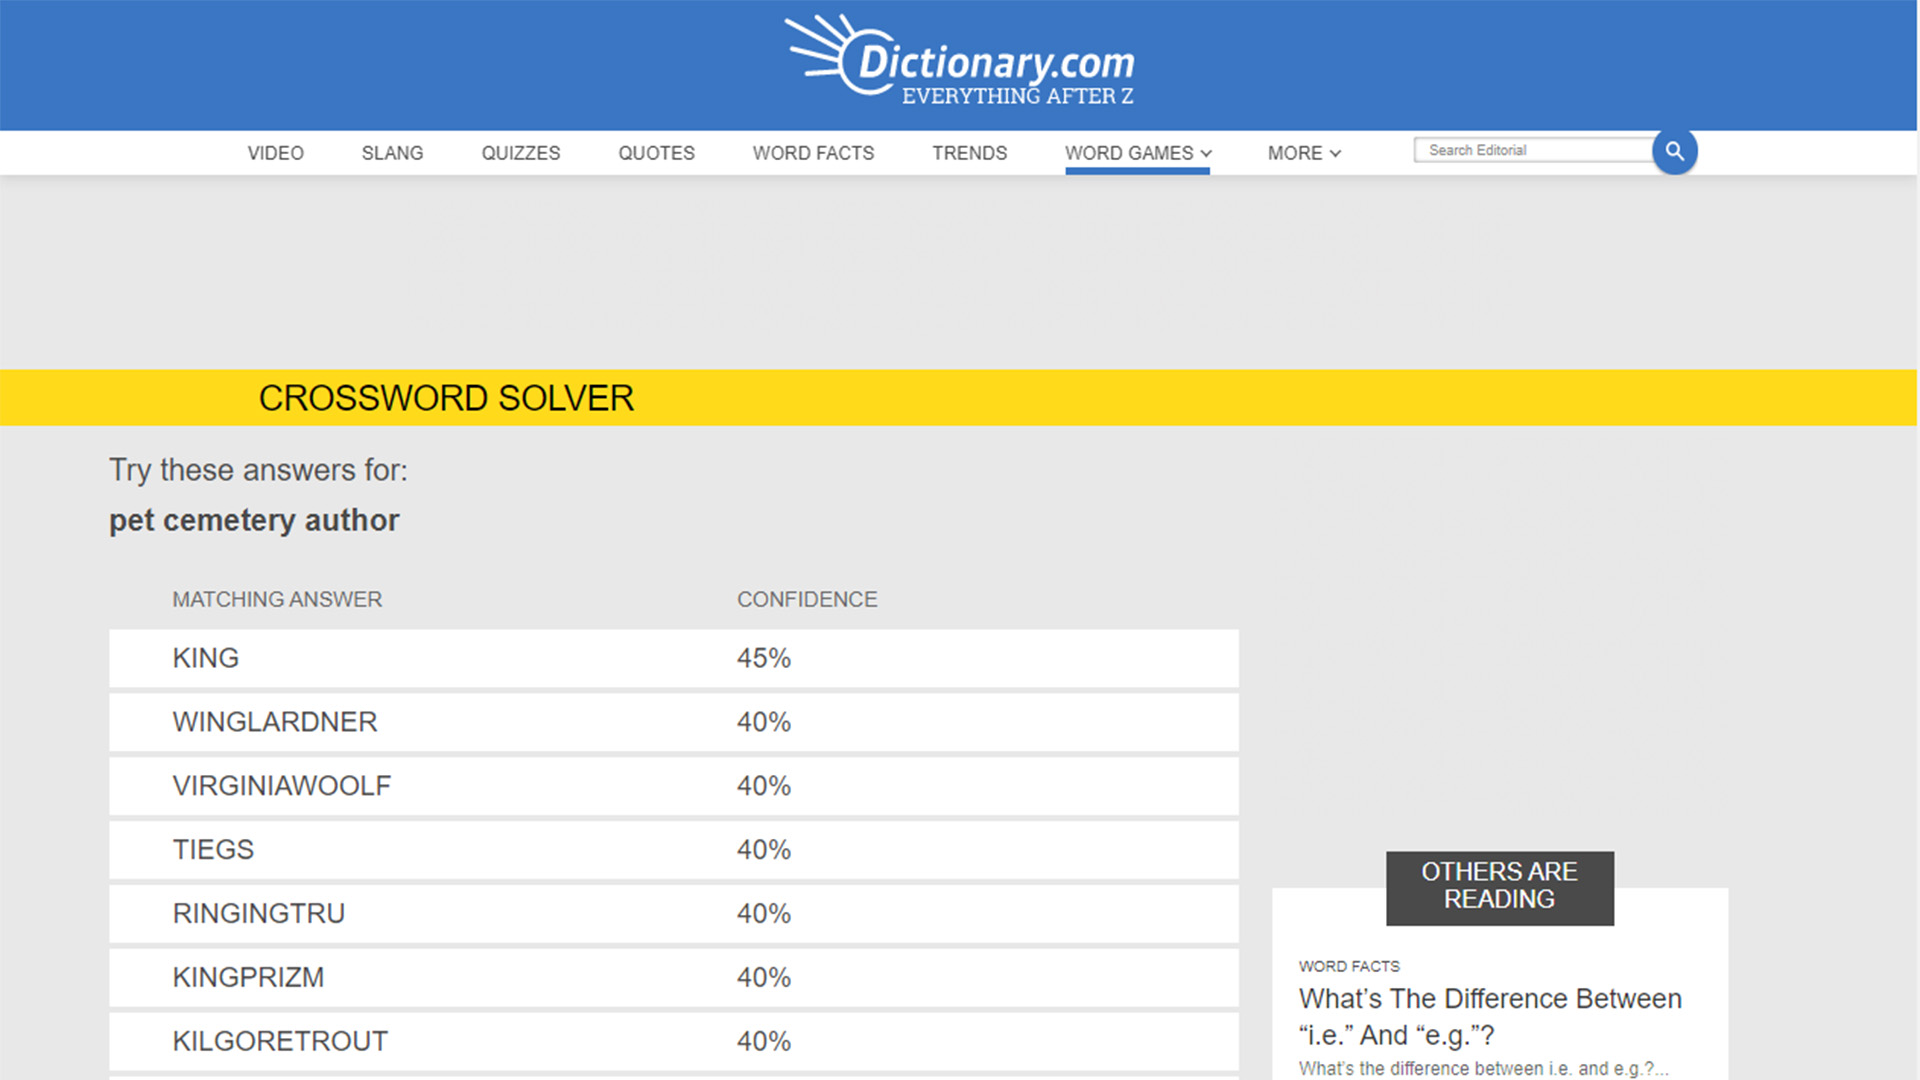 dictionaryDotcom网站截求器屏幕截图